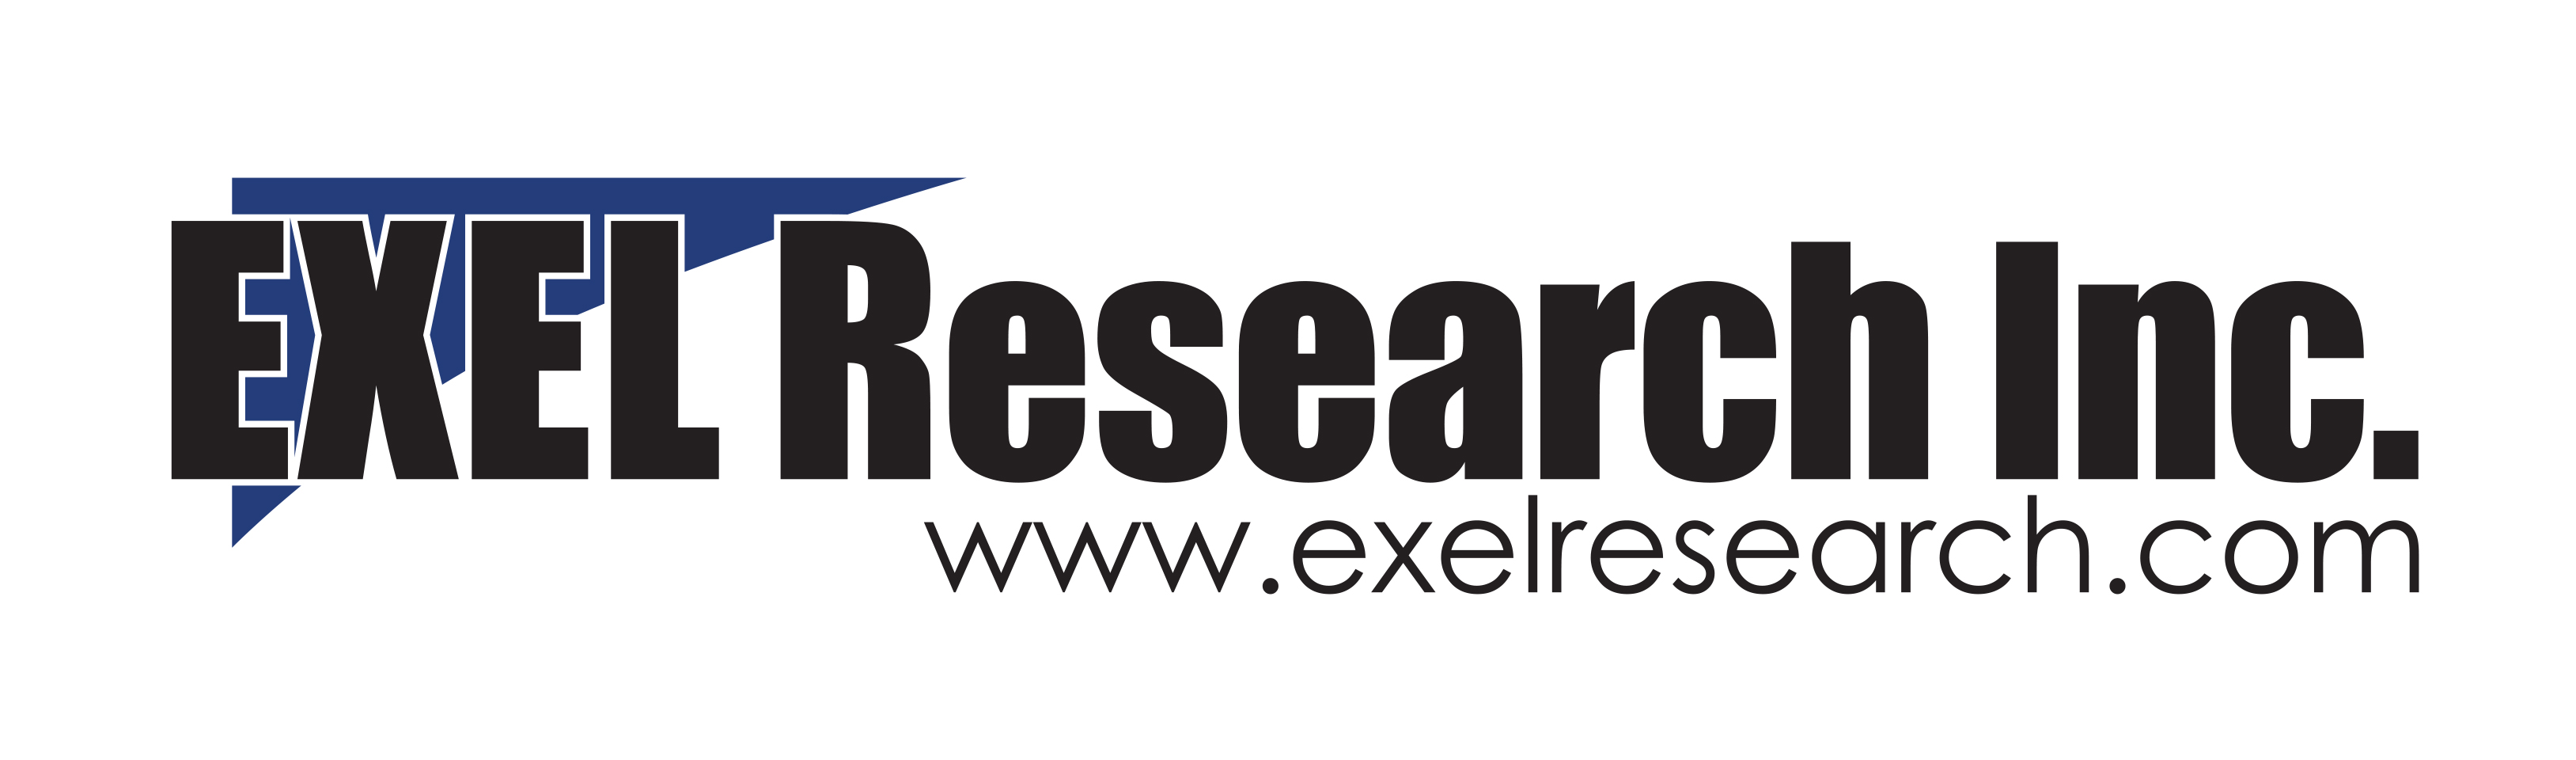 Exel Reasearch Inc. Logo